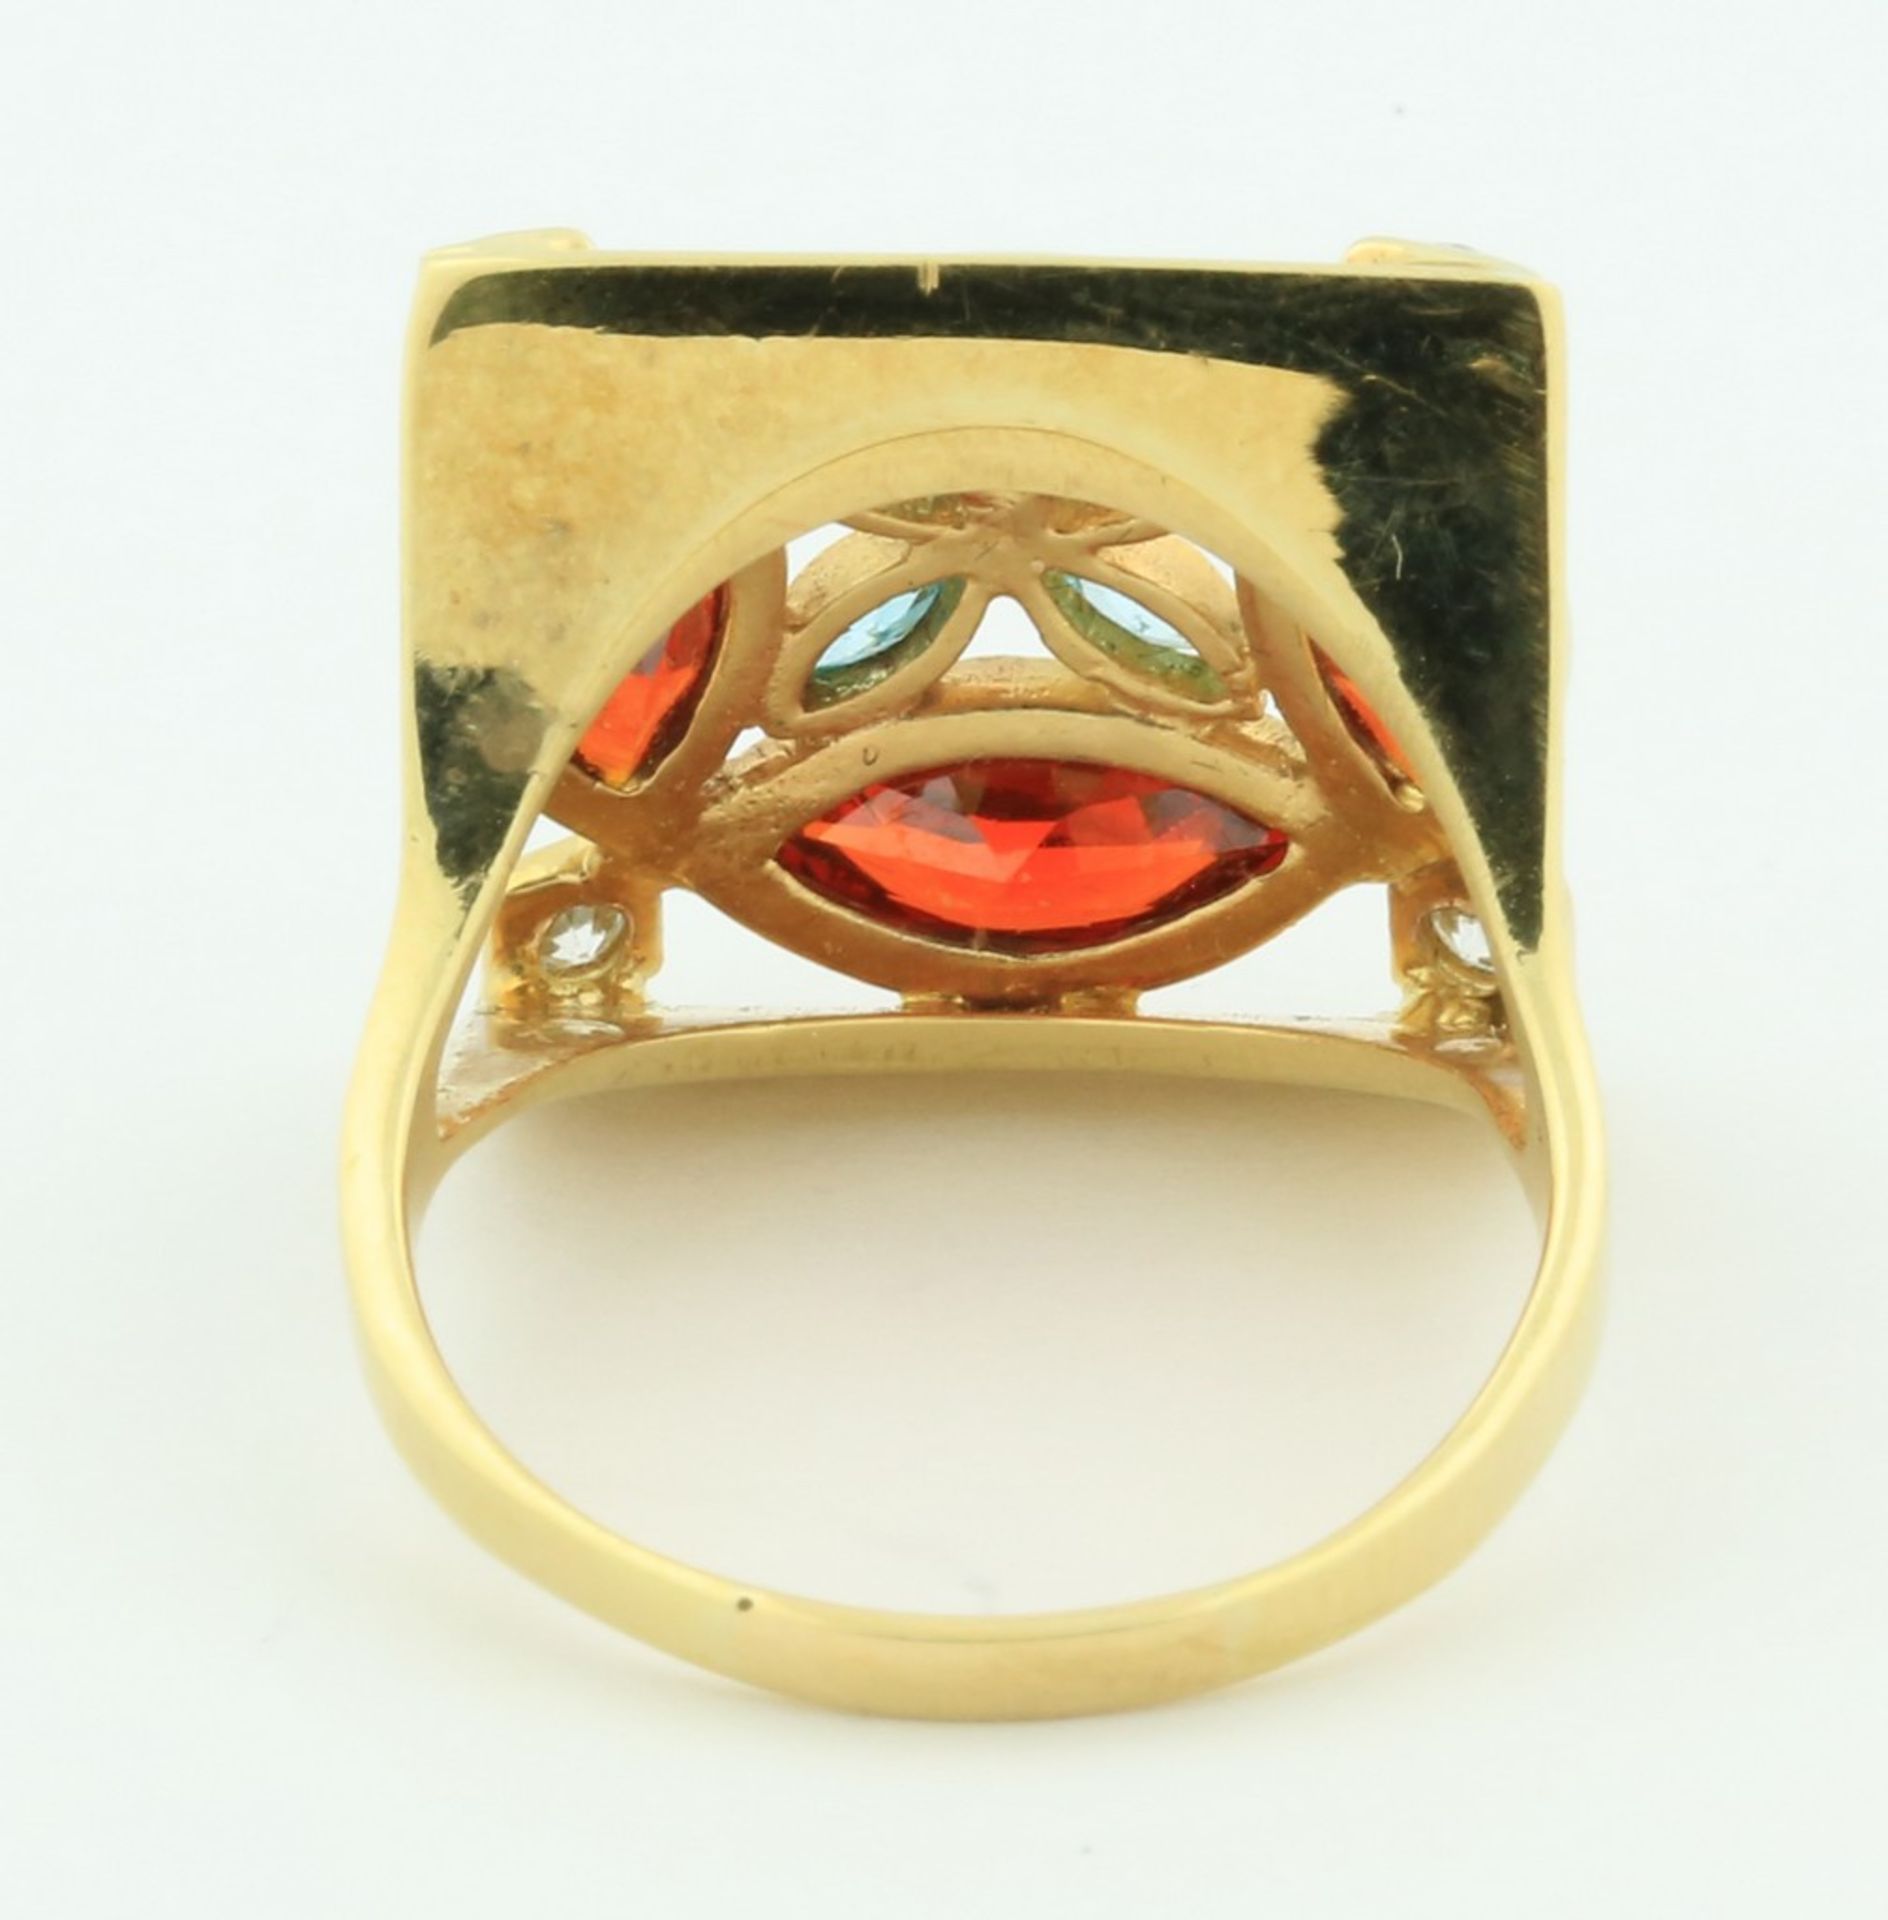 GOLD GEM-SET RING A cluster of gemstones, mounted in 14 karat yellow gold, Ring size 9.25 - Image 4 of 5